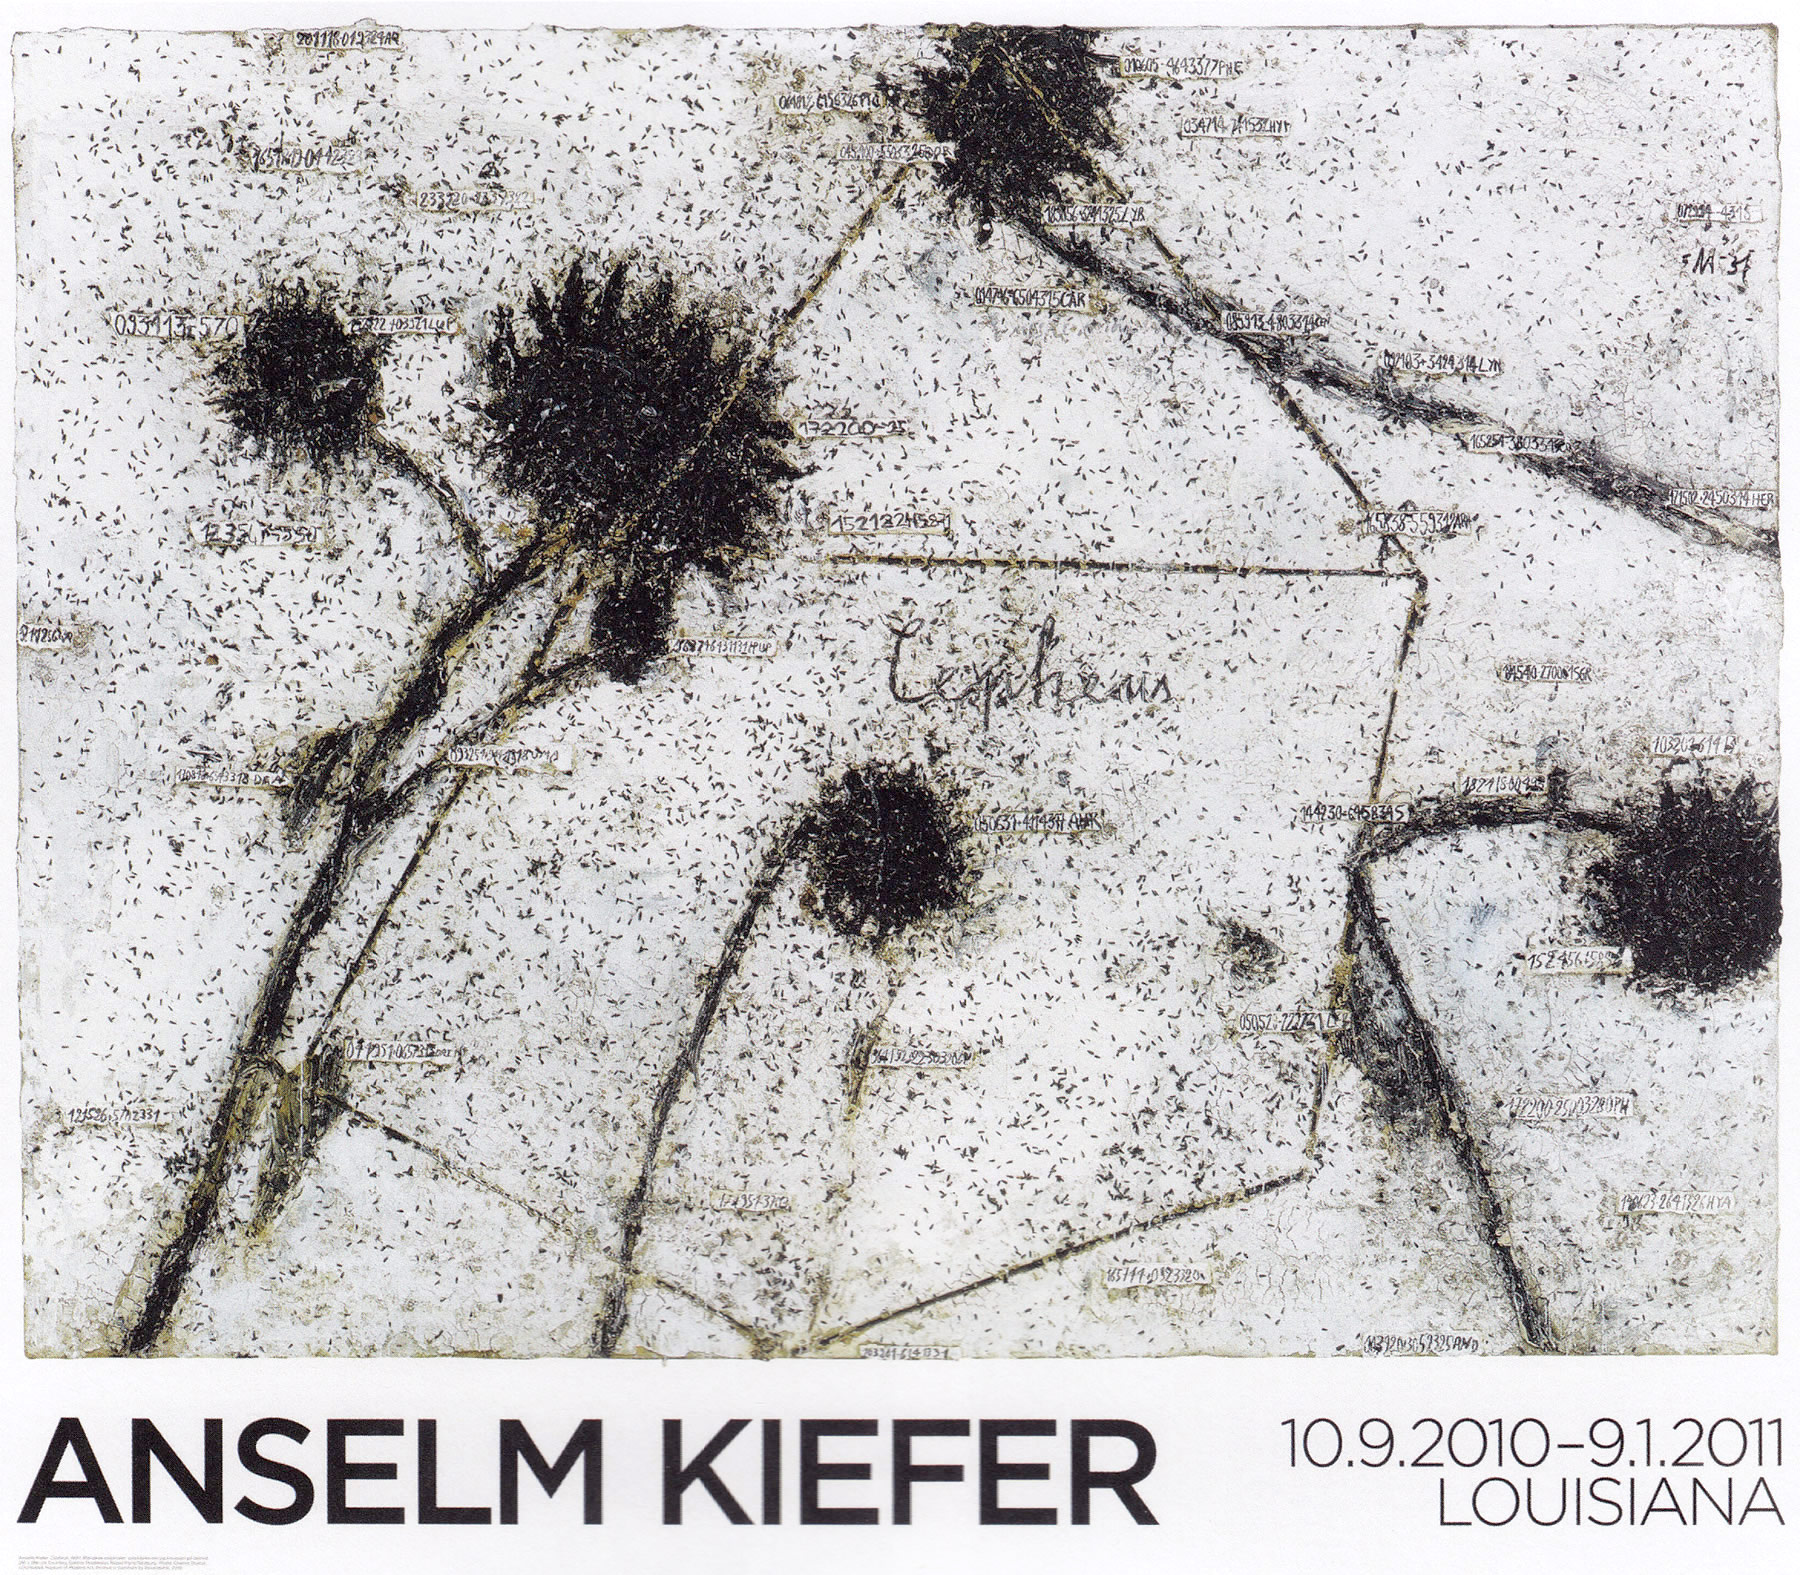 Anselm Kiefer: Louisiana Museum of Modern Art, Humlebak. 2011